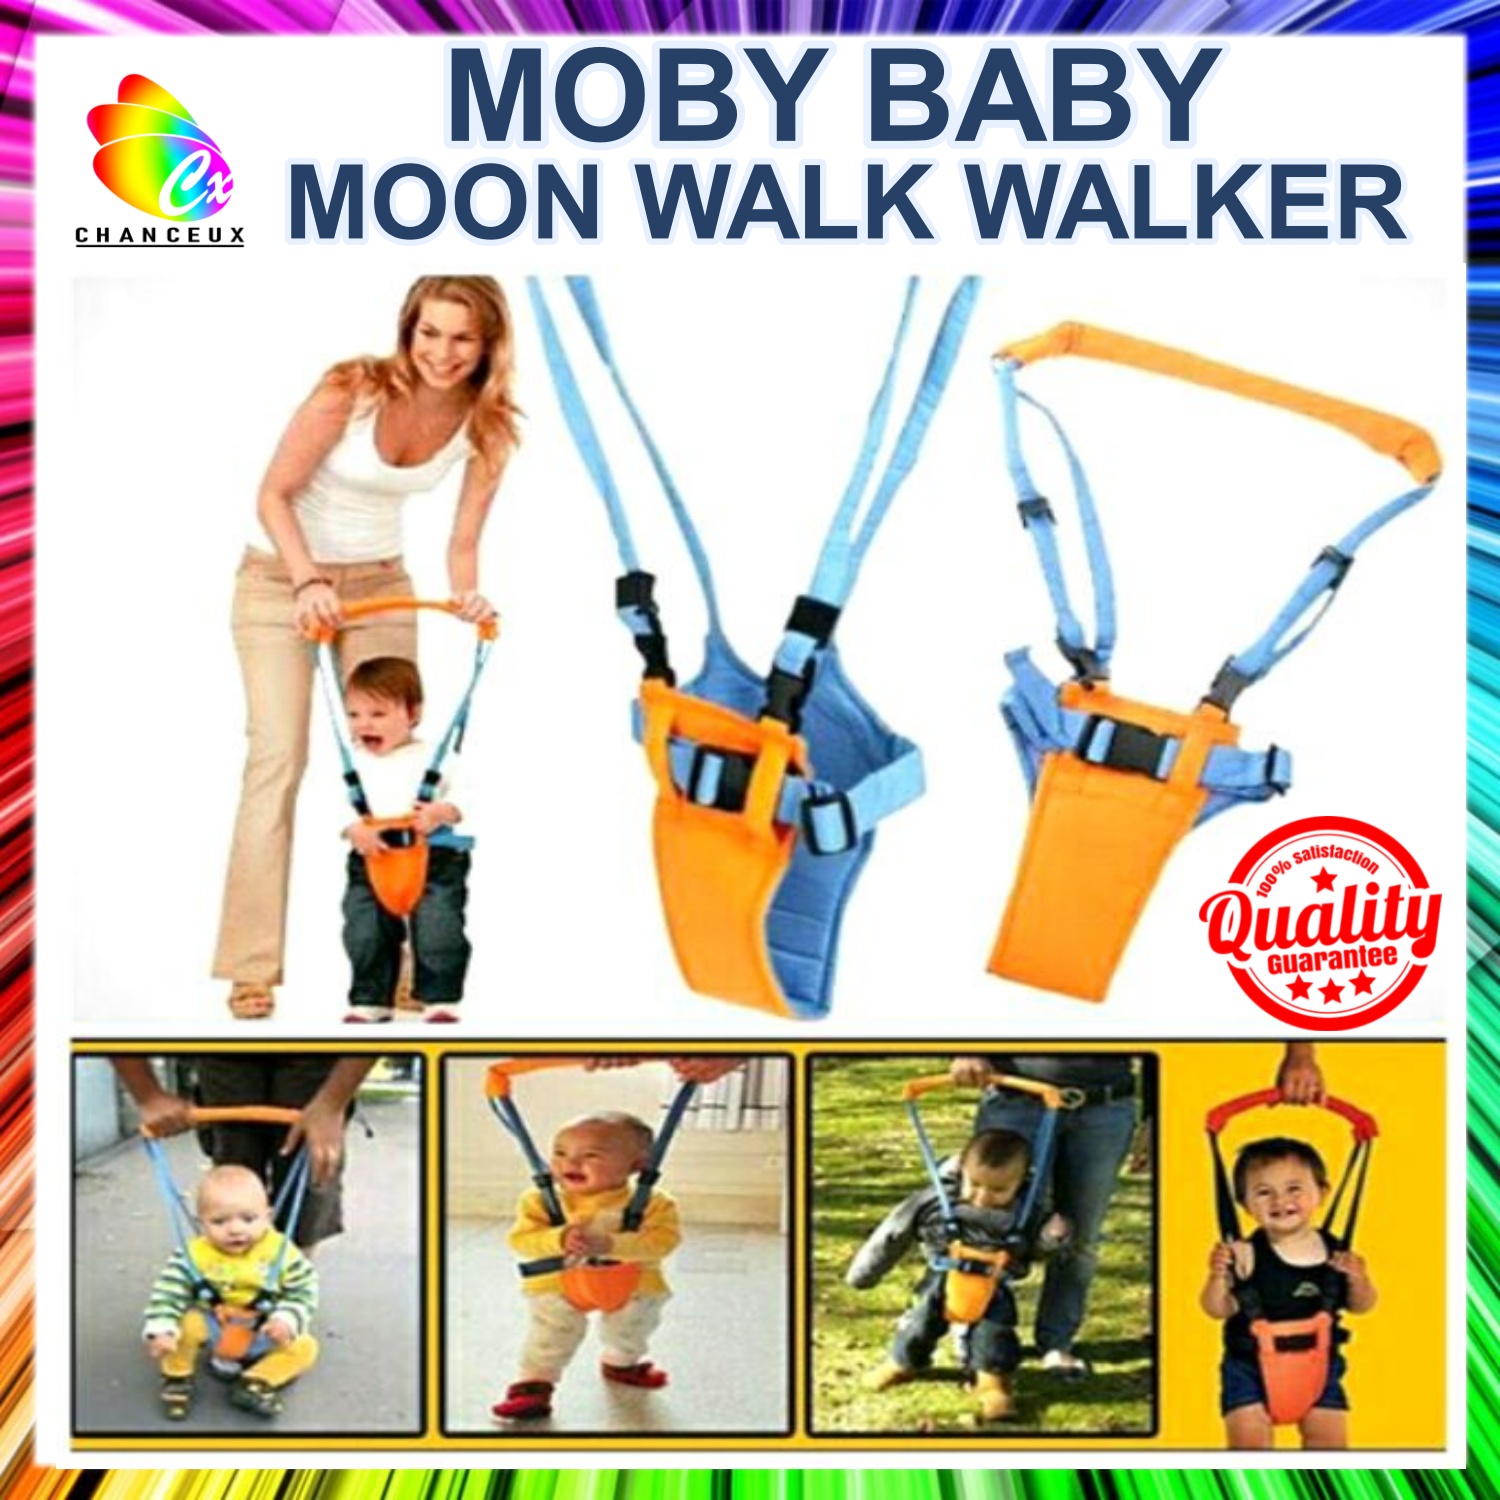 moby baby moon walk